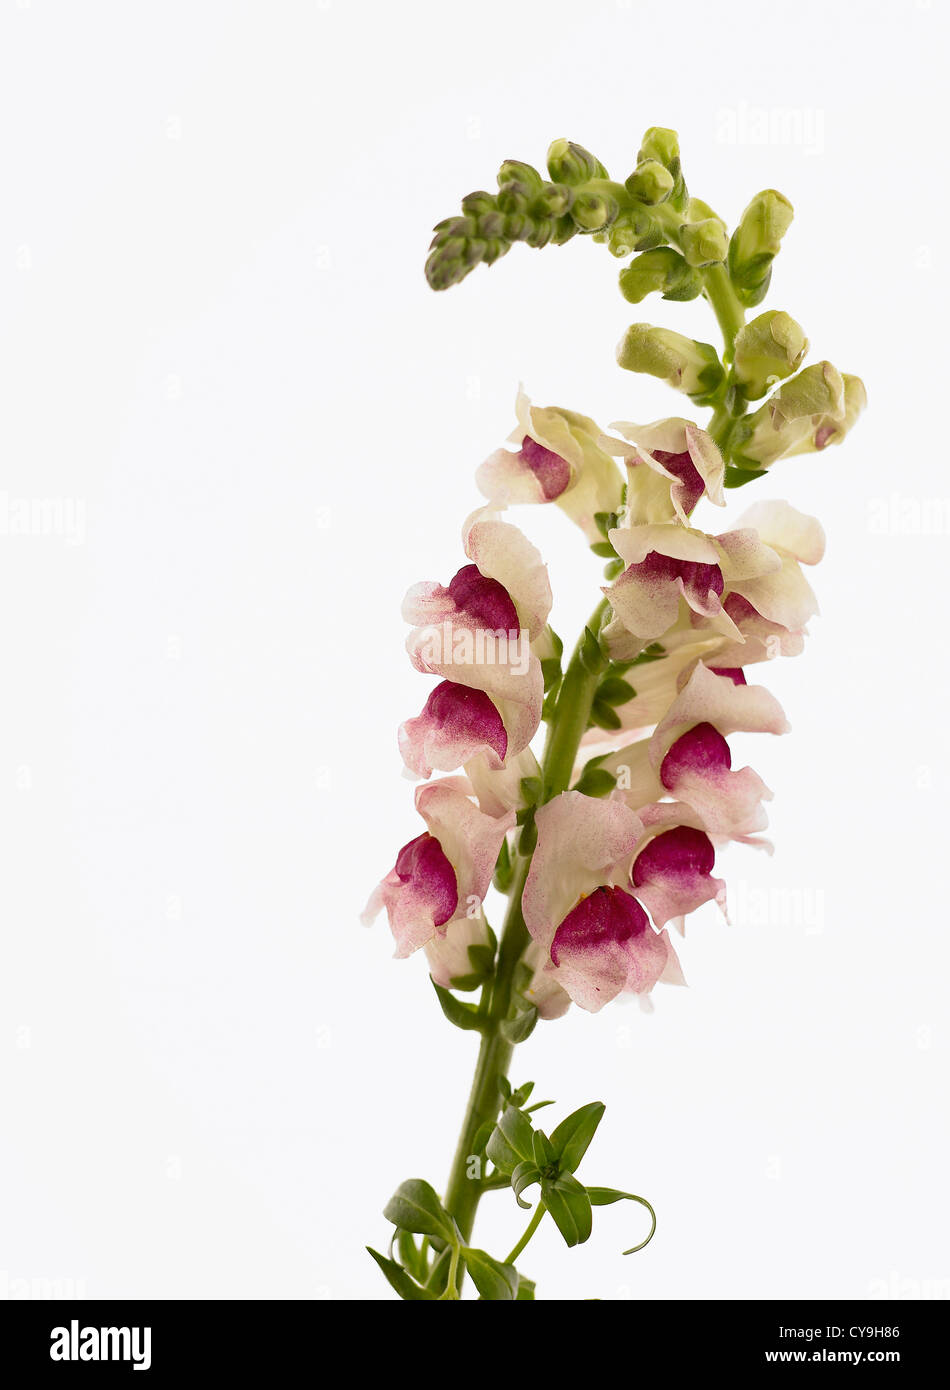 Antirrhinum majus, Snapdragon. Single stem with abundant pink and white flowers against a white background. Stock Photo